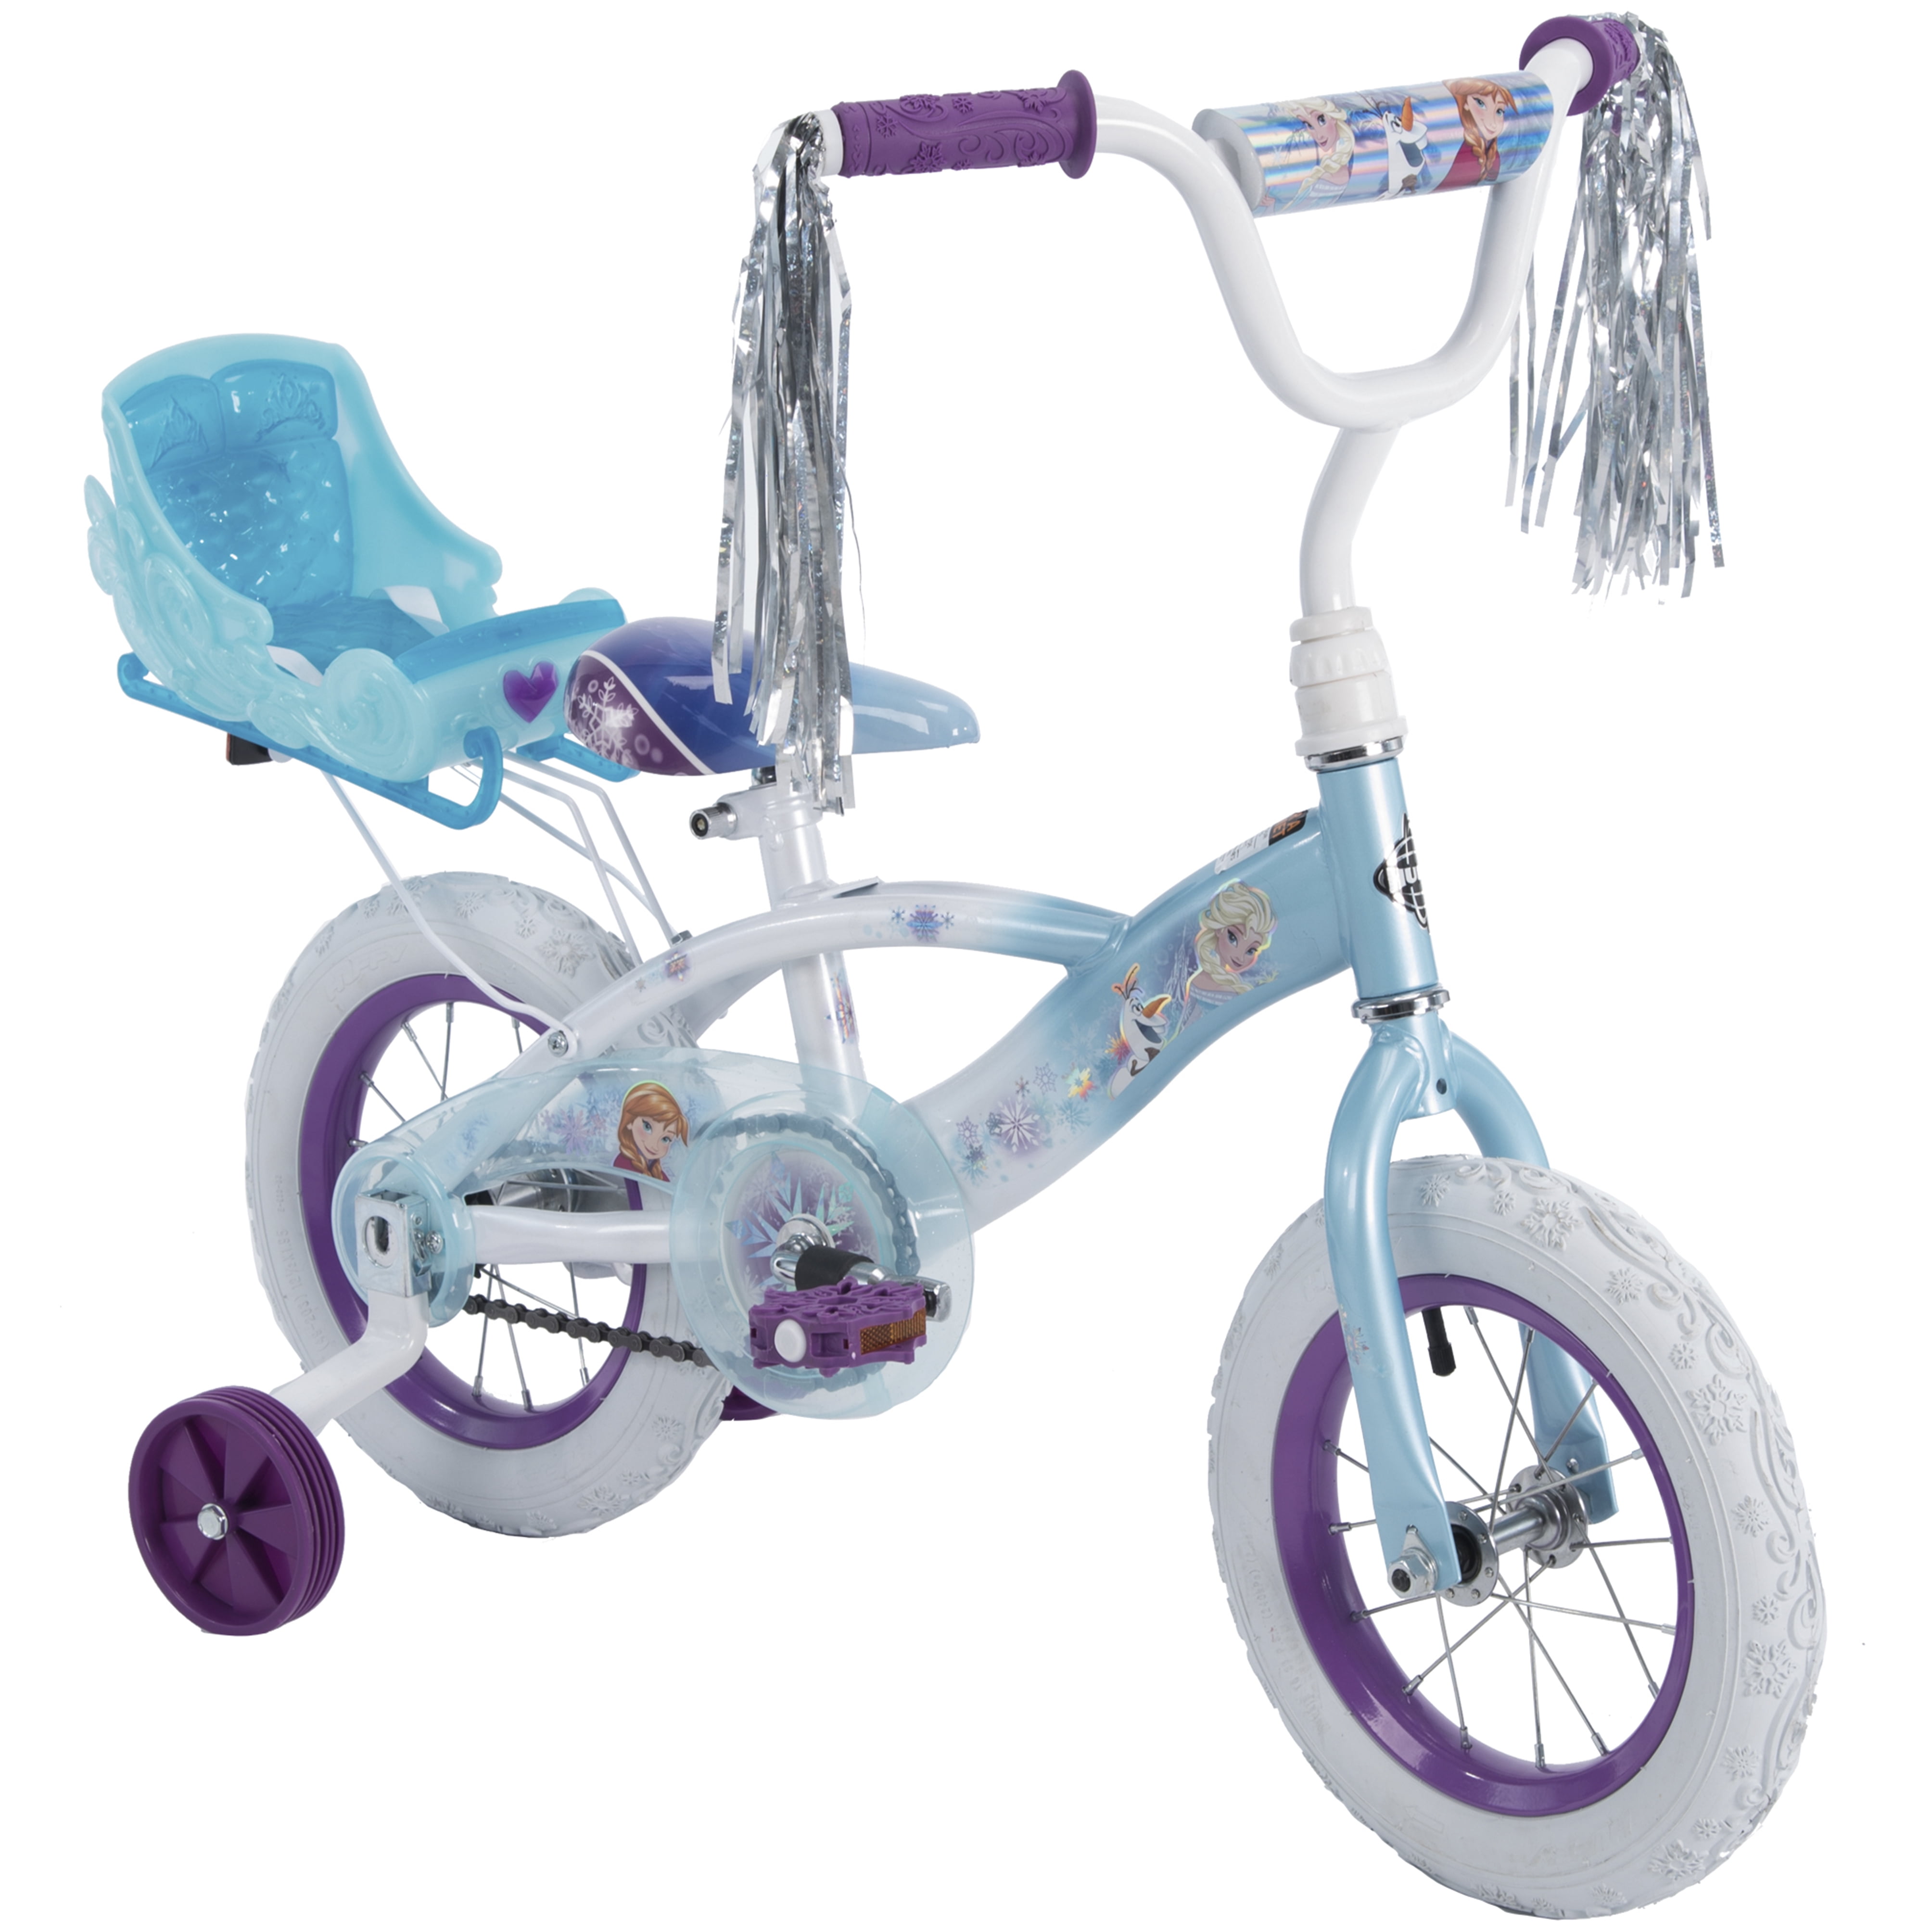 BIGSALE+FREESHIP Disney Princess Girls' 12" Bike with Doll Carrier by Huffy 